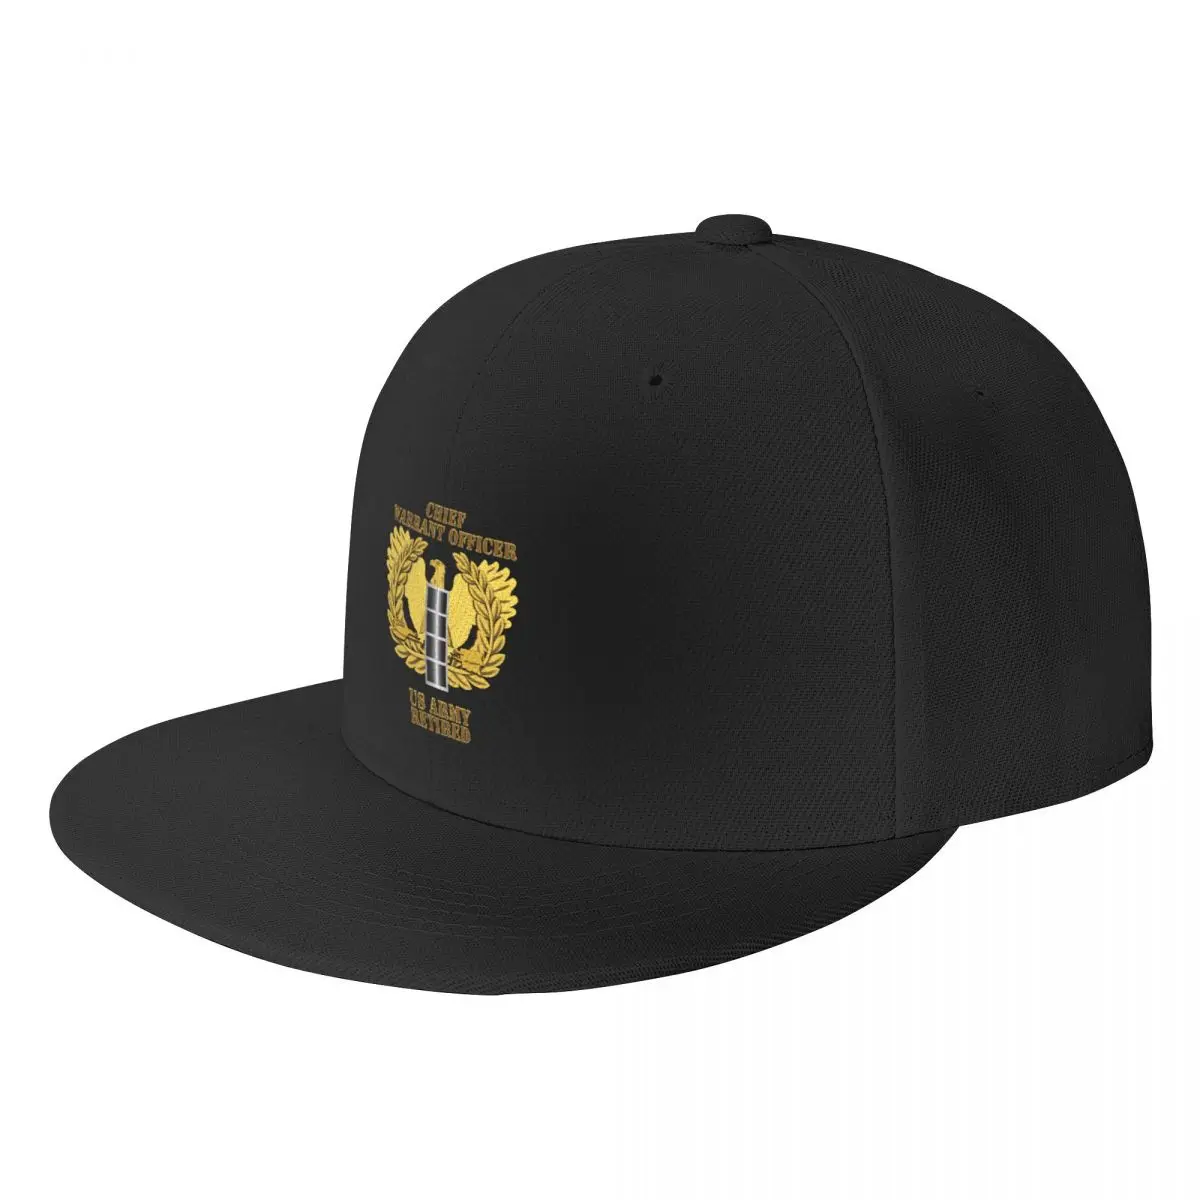 

Army - Emblem - Warrant Officer - CW4 - Retired Baseball Cap Luxury Cap New In Hat Christmas Hat Ladies Hat Men's